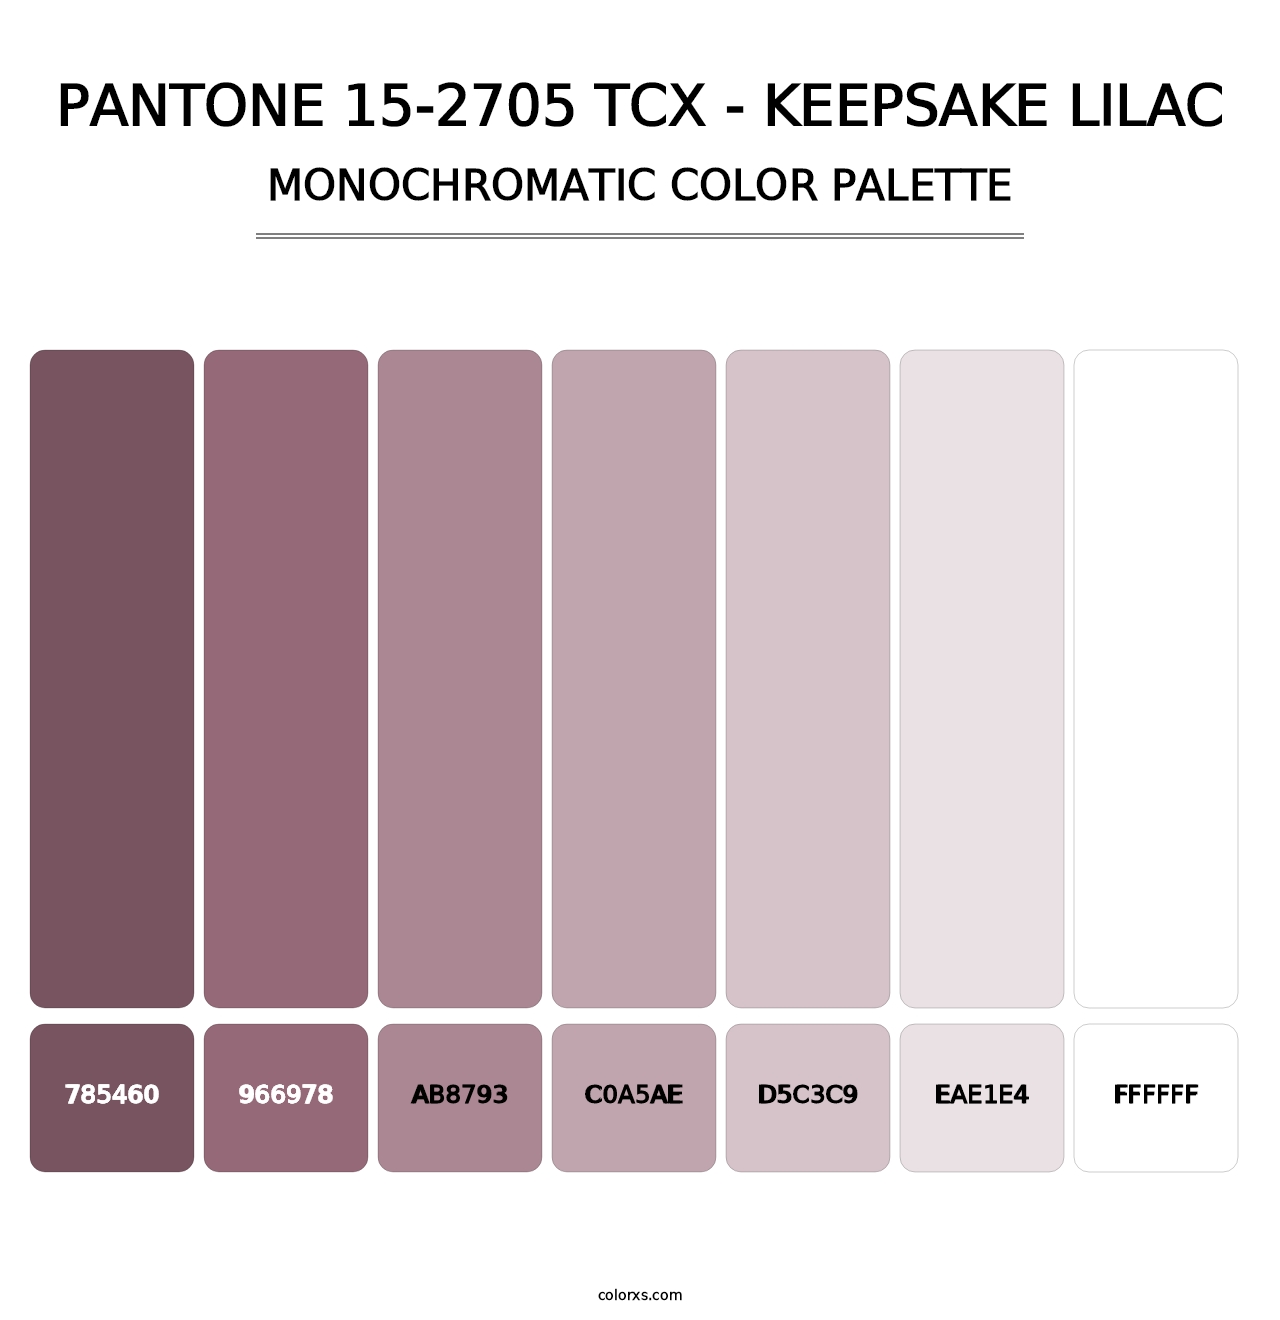 PANTONE 15-2705 TCX - Keepsake Lilac - Monochromatic Color Palette